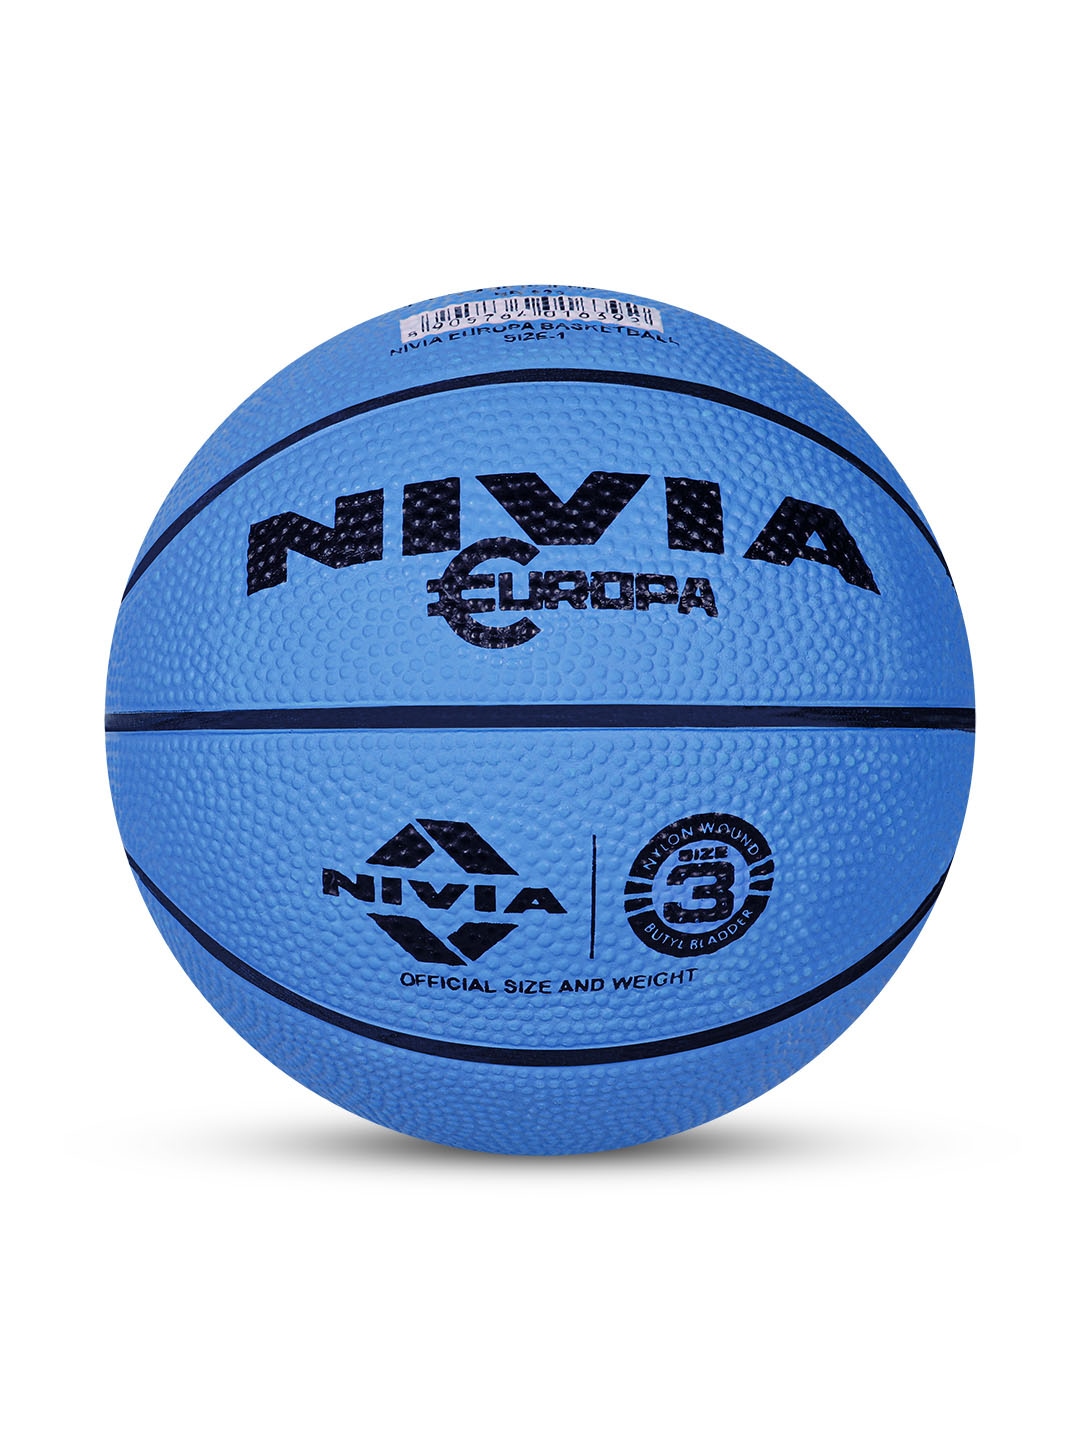 

NIVIA Printed Rubber Basketball, Blue